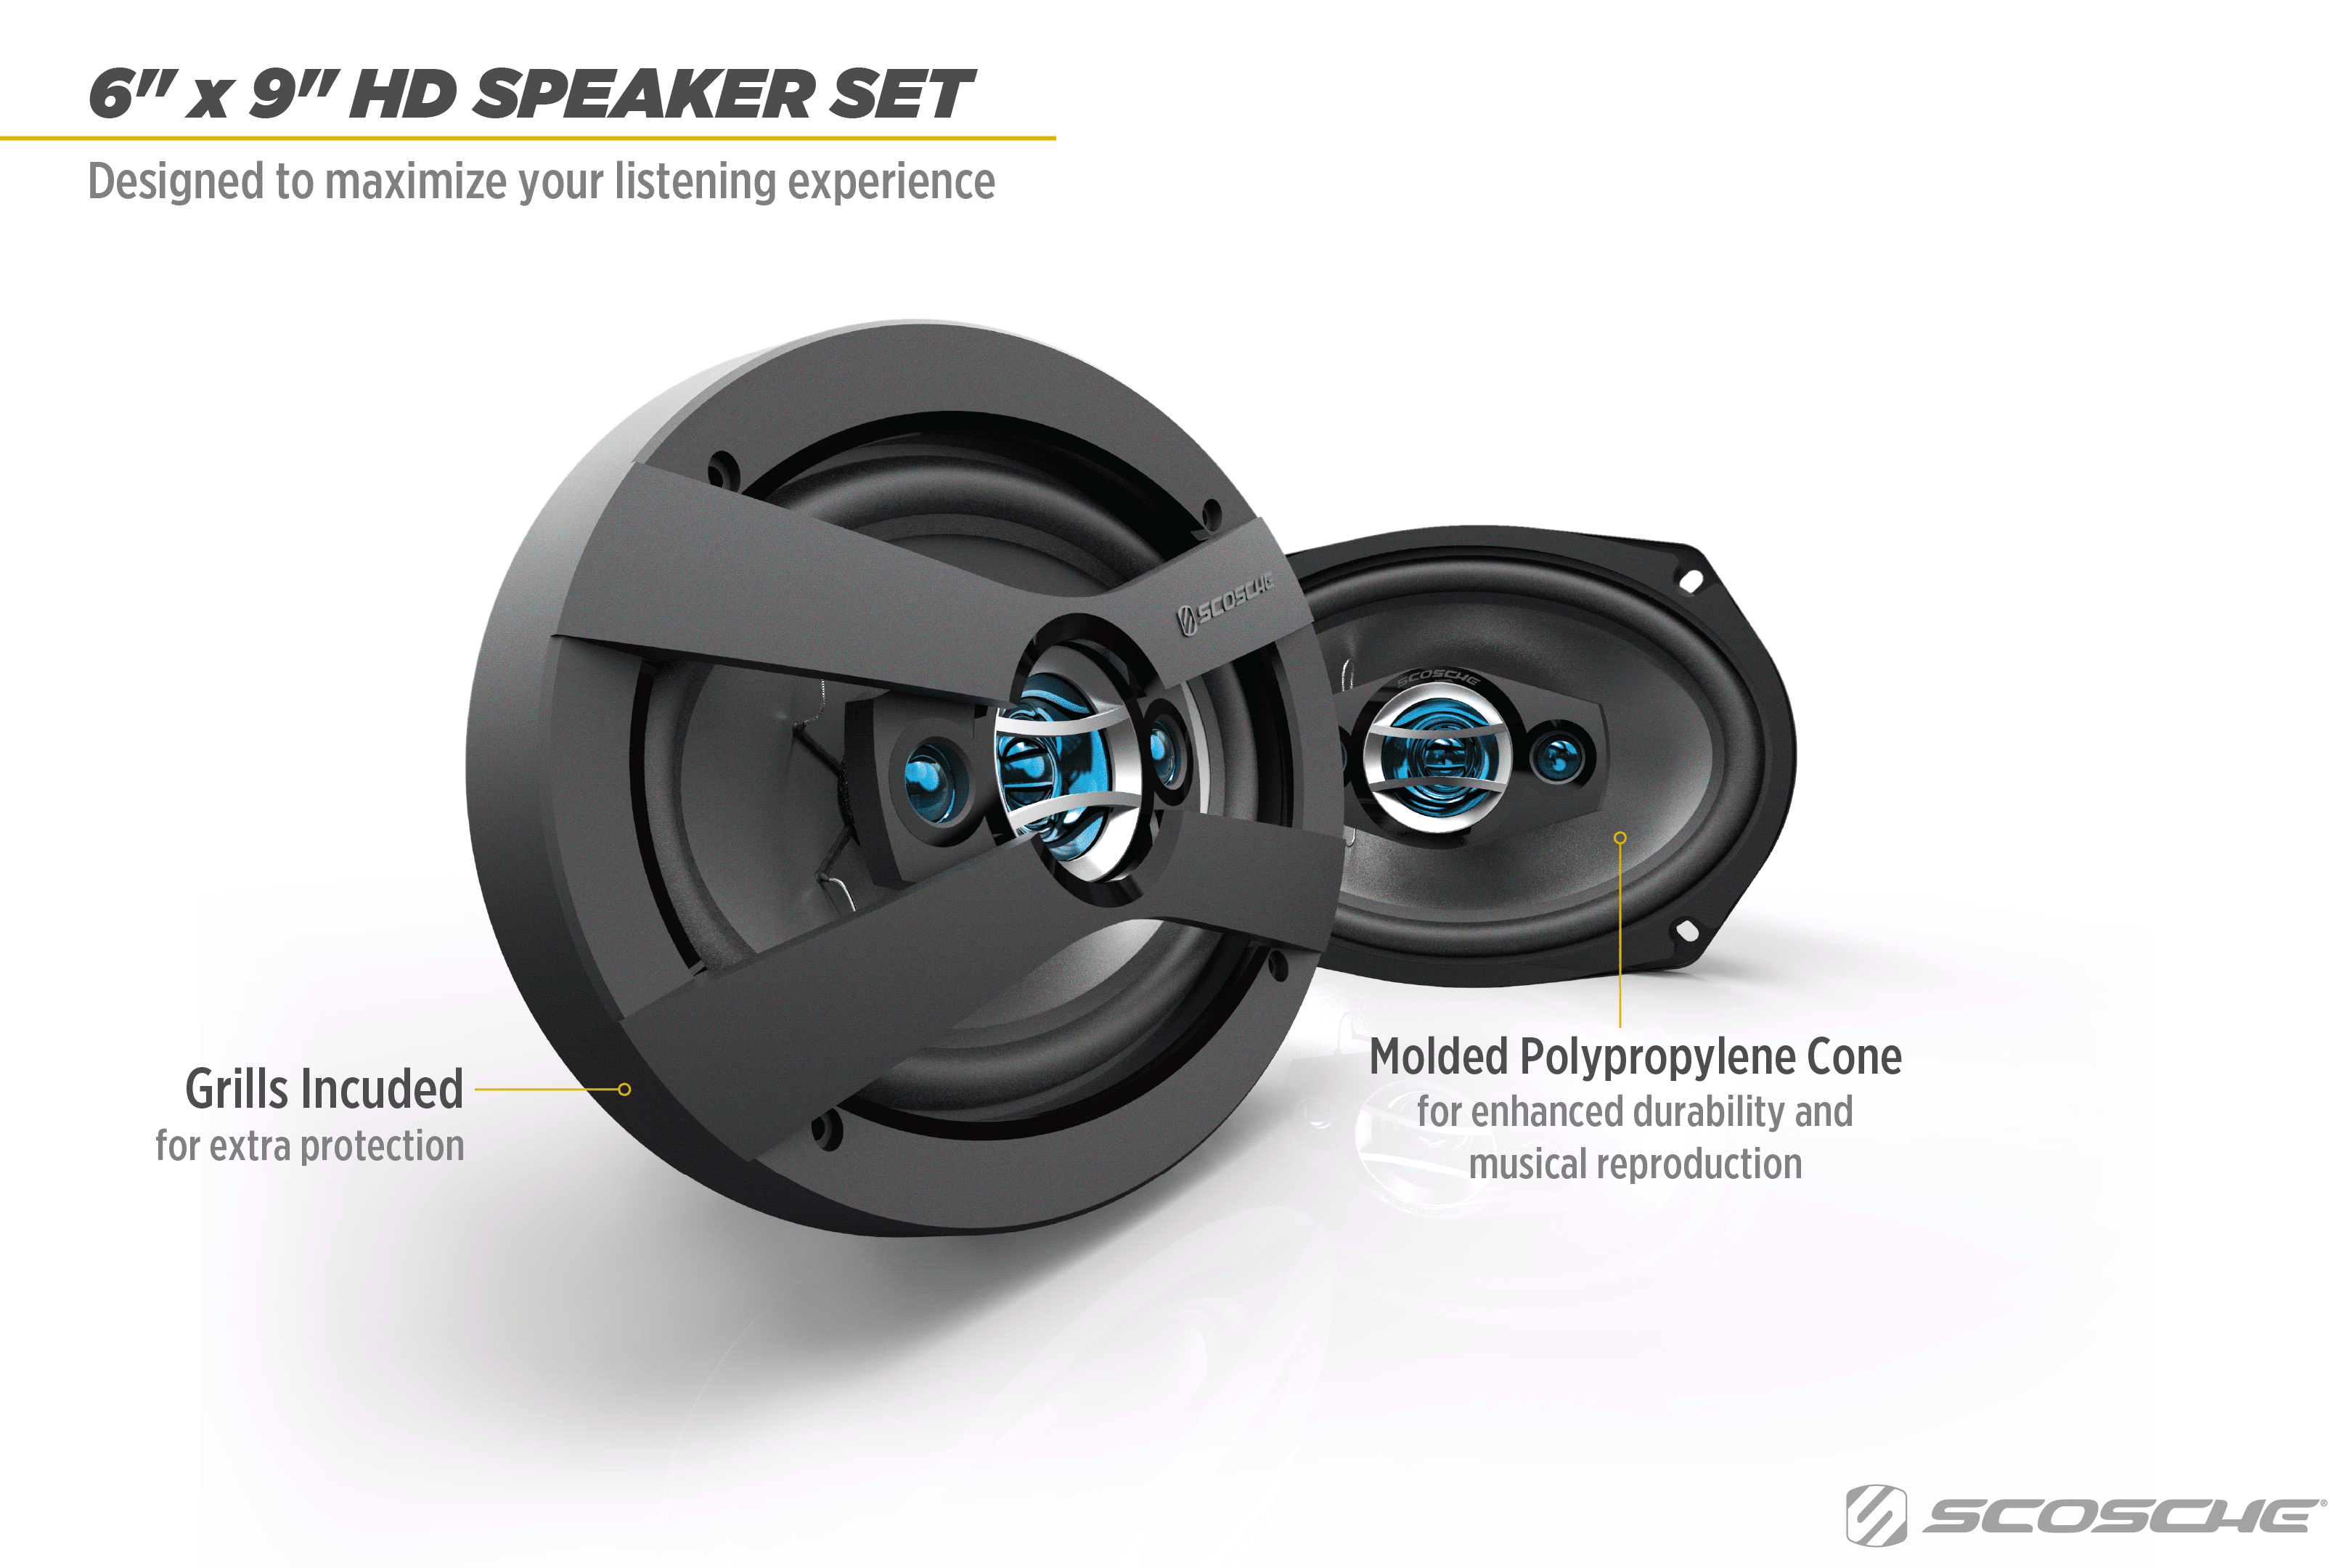 Scosche HD6904F - HD Speakers | Speakers for Cars | 6x9